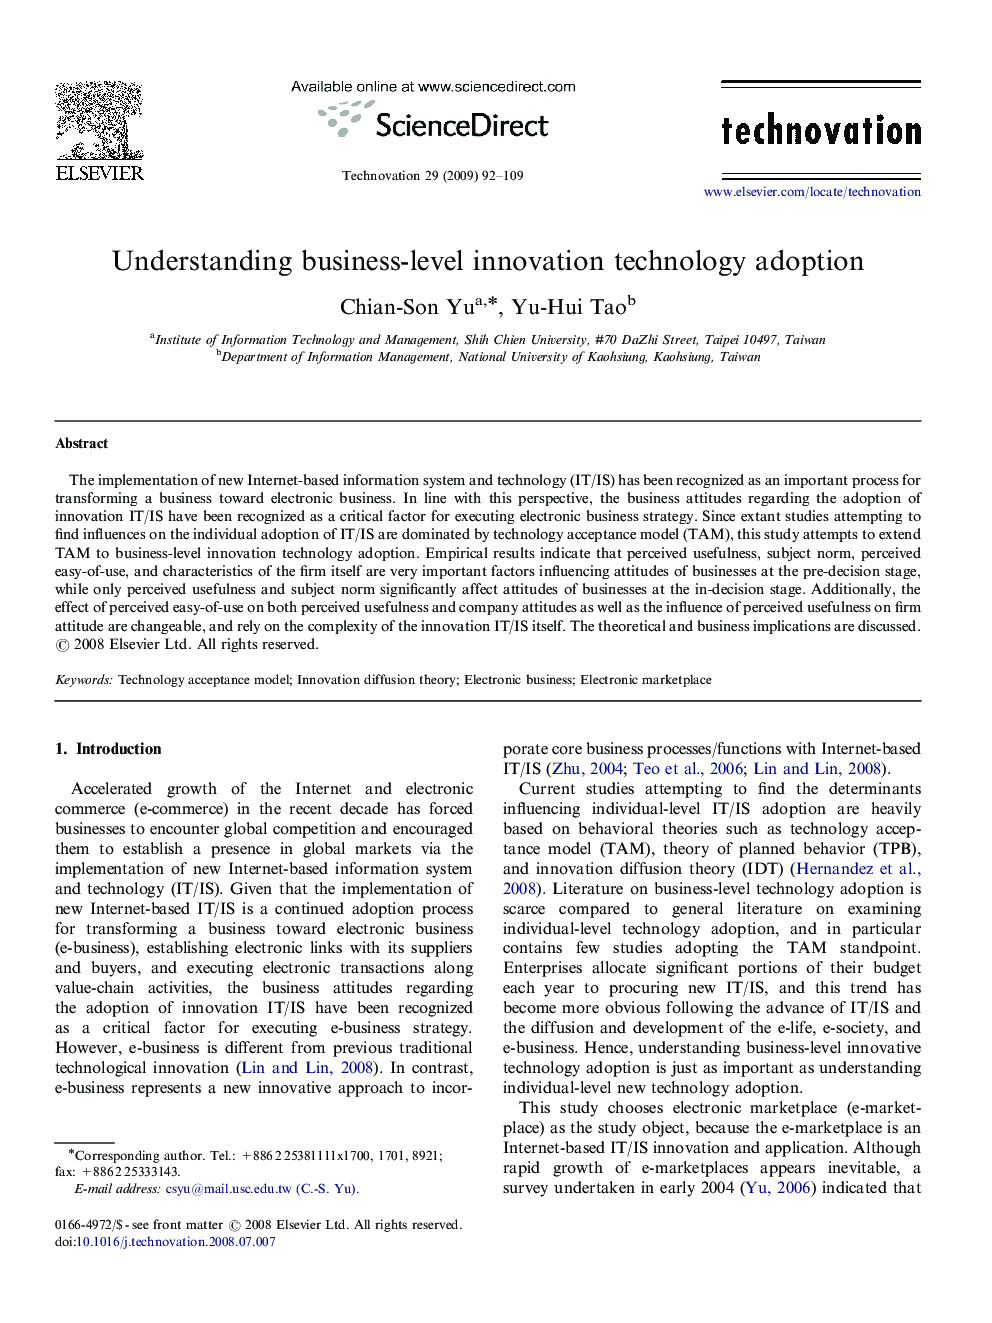 Understanding business-level innovation technology adoption